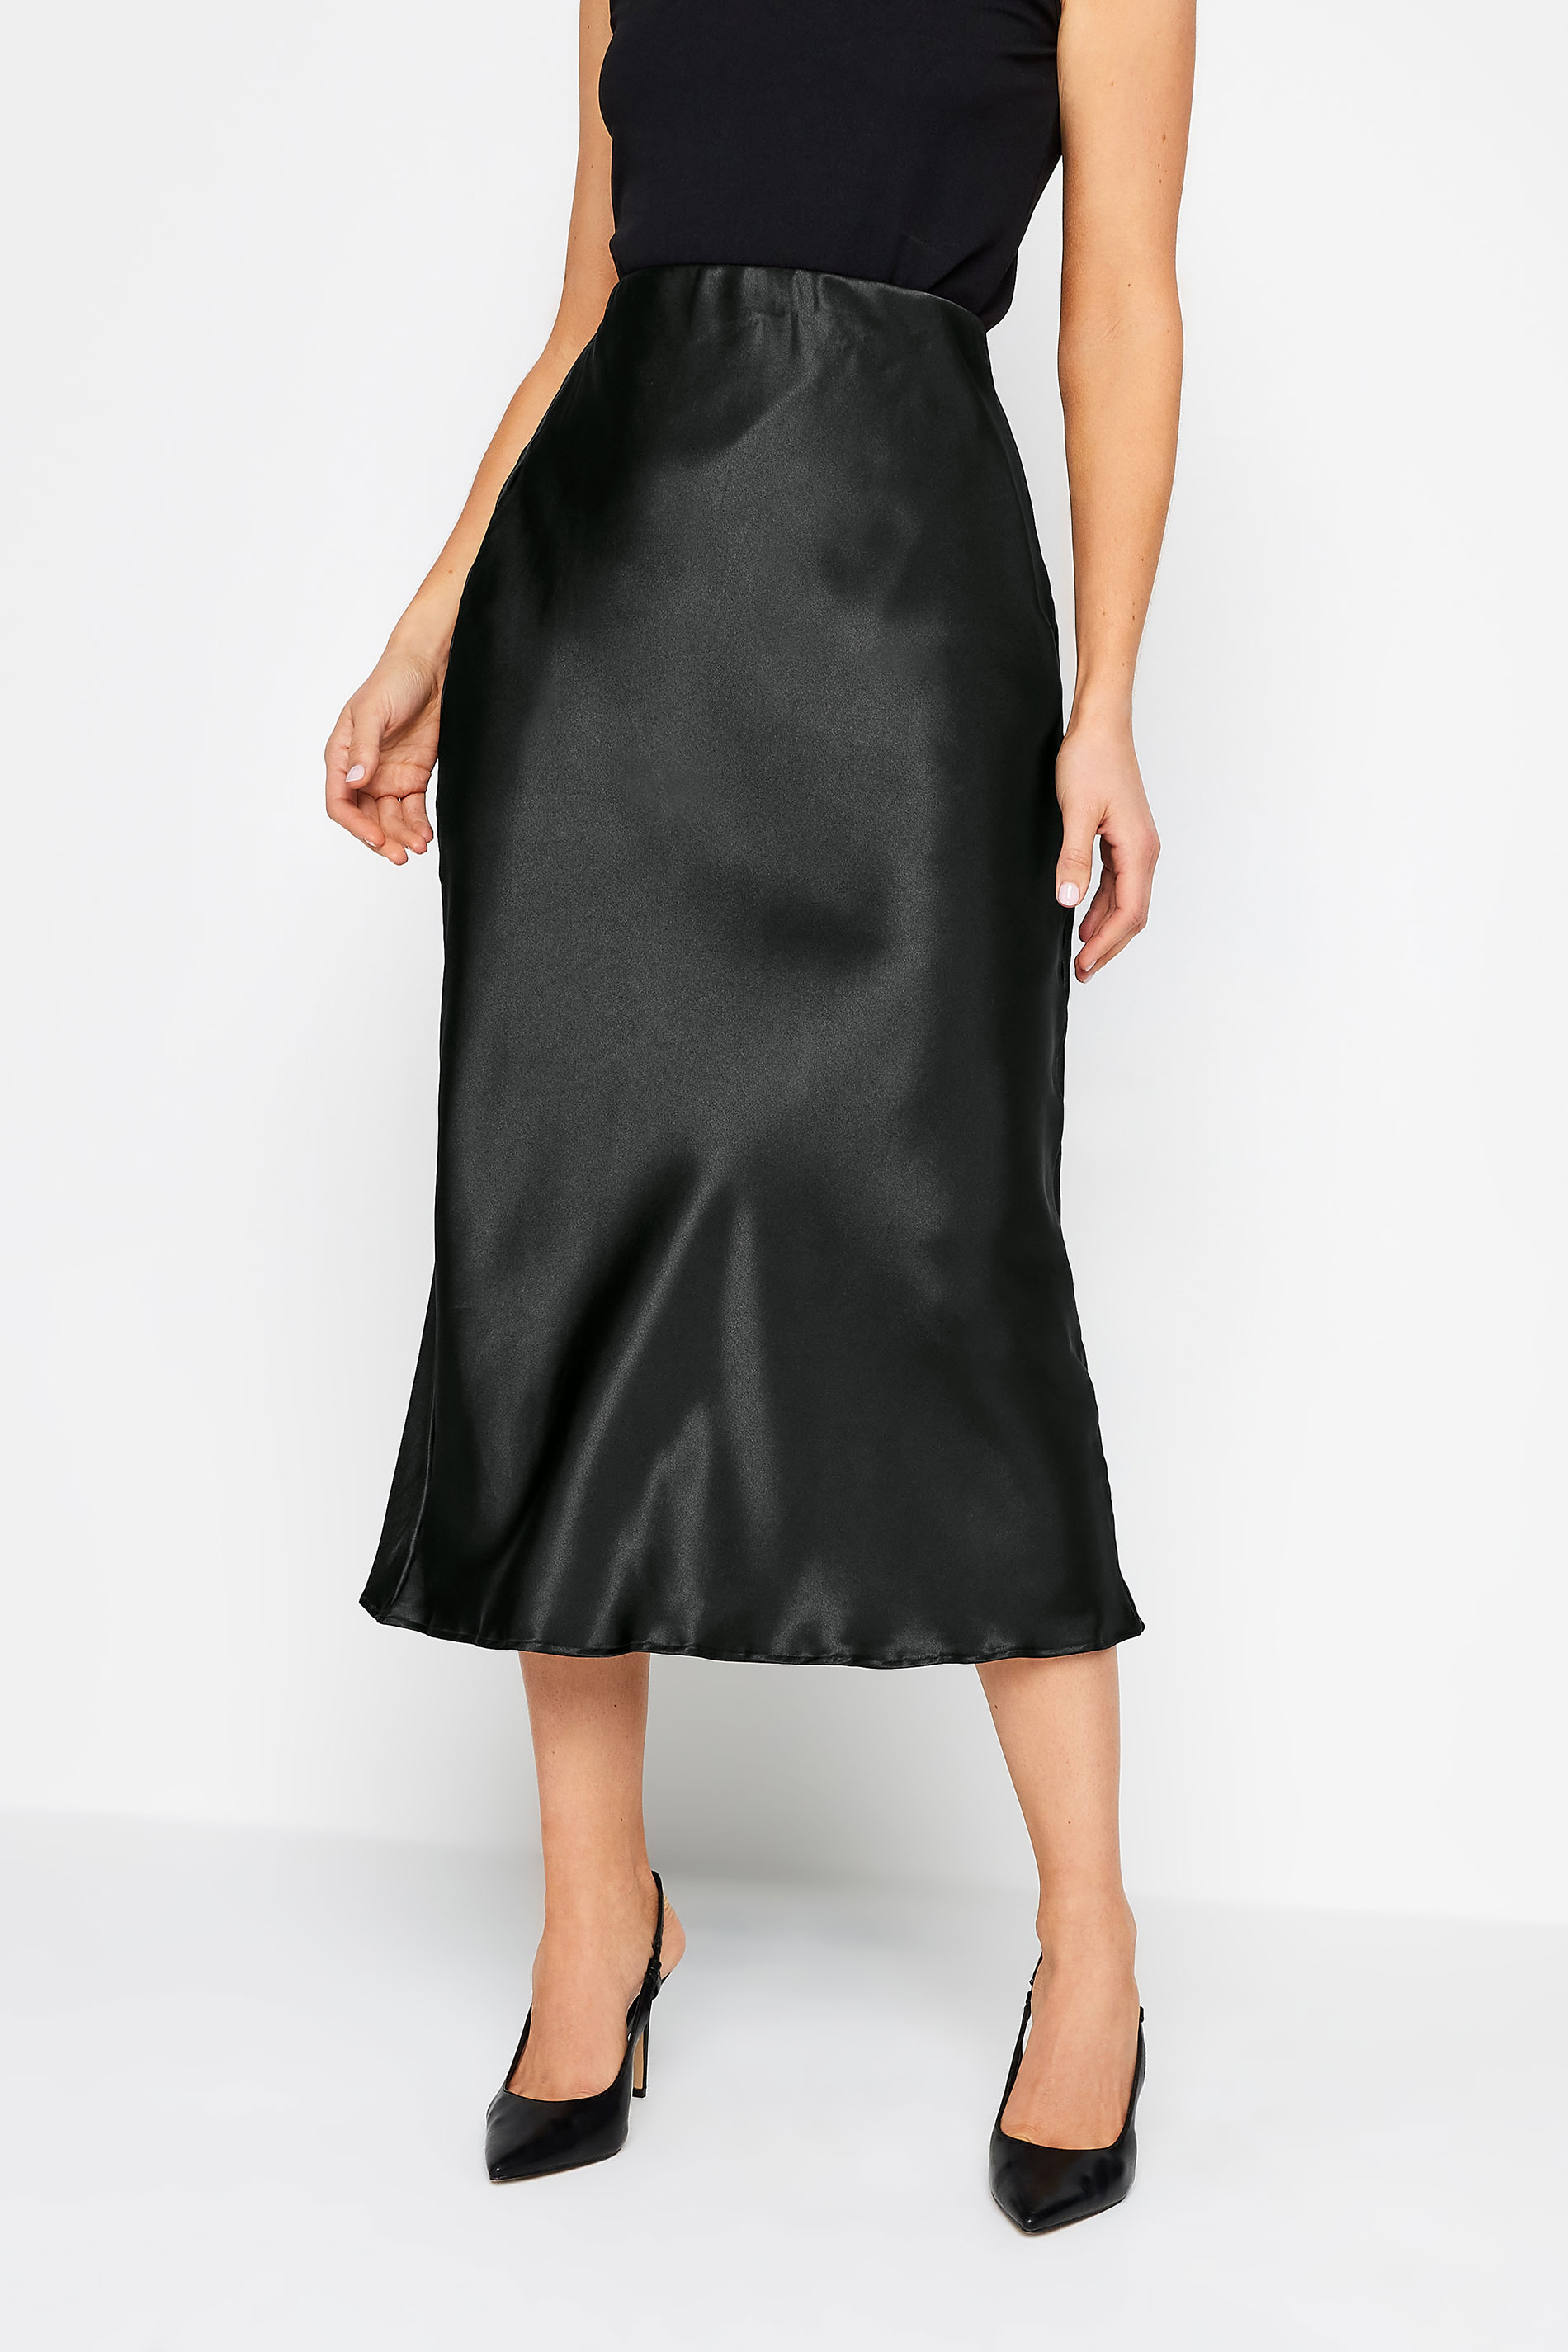 LTS Tall Womens Black Satin Midi Skirt | Long Tall Sally  2